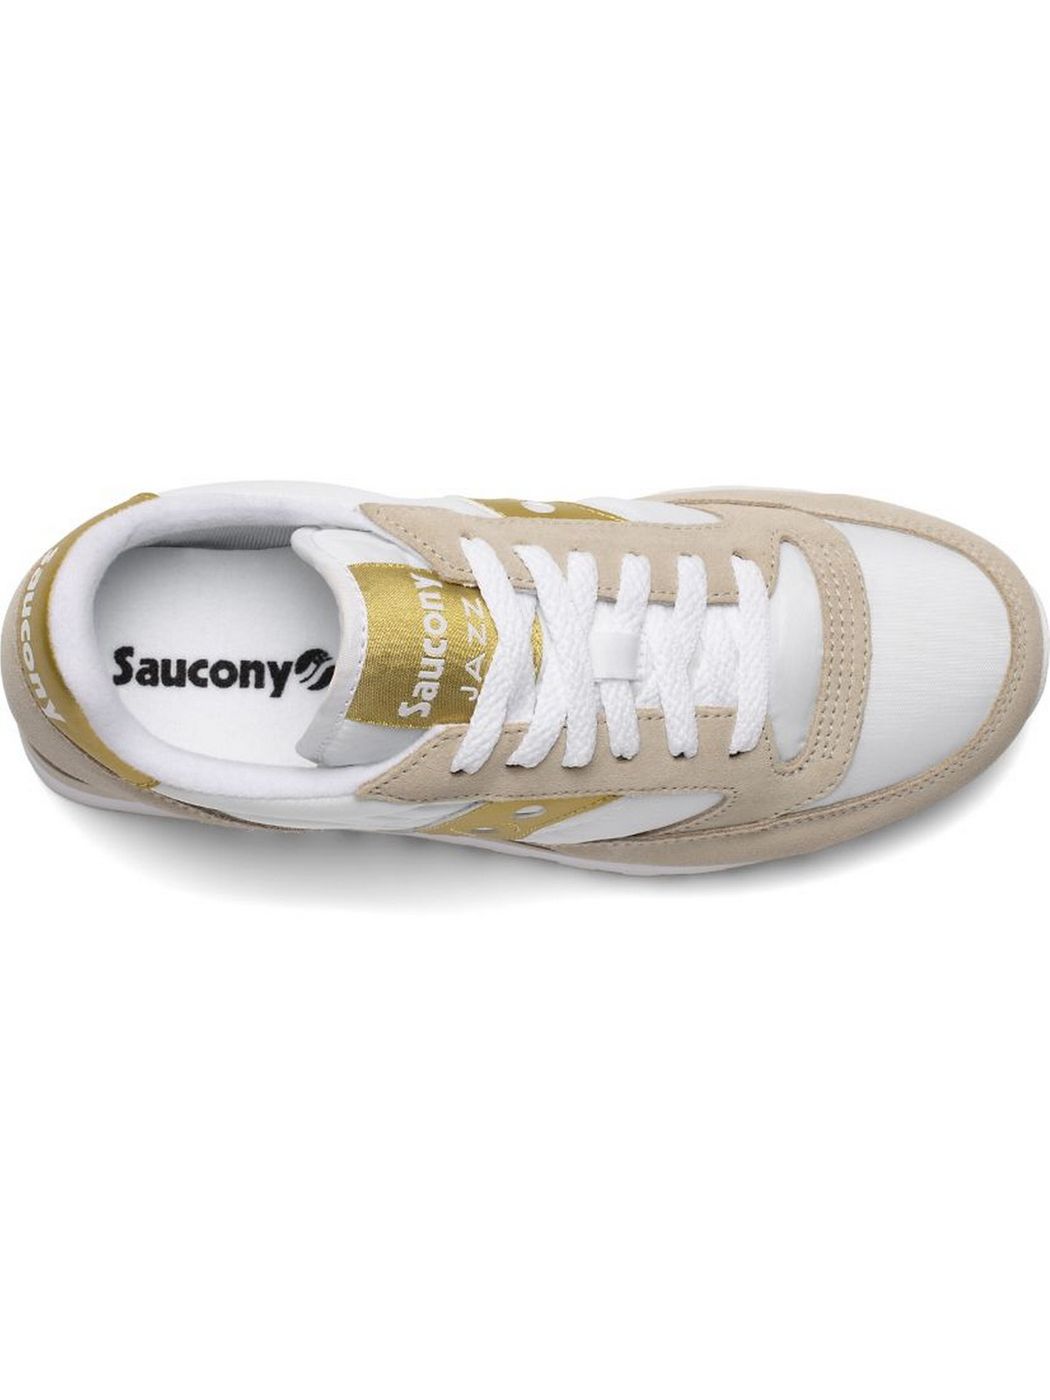 Saucony Sneaker Donna Jazz original S1044 Argento